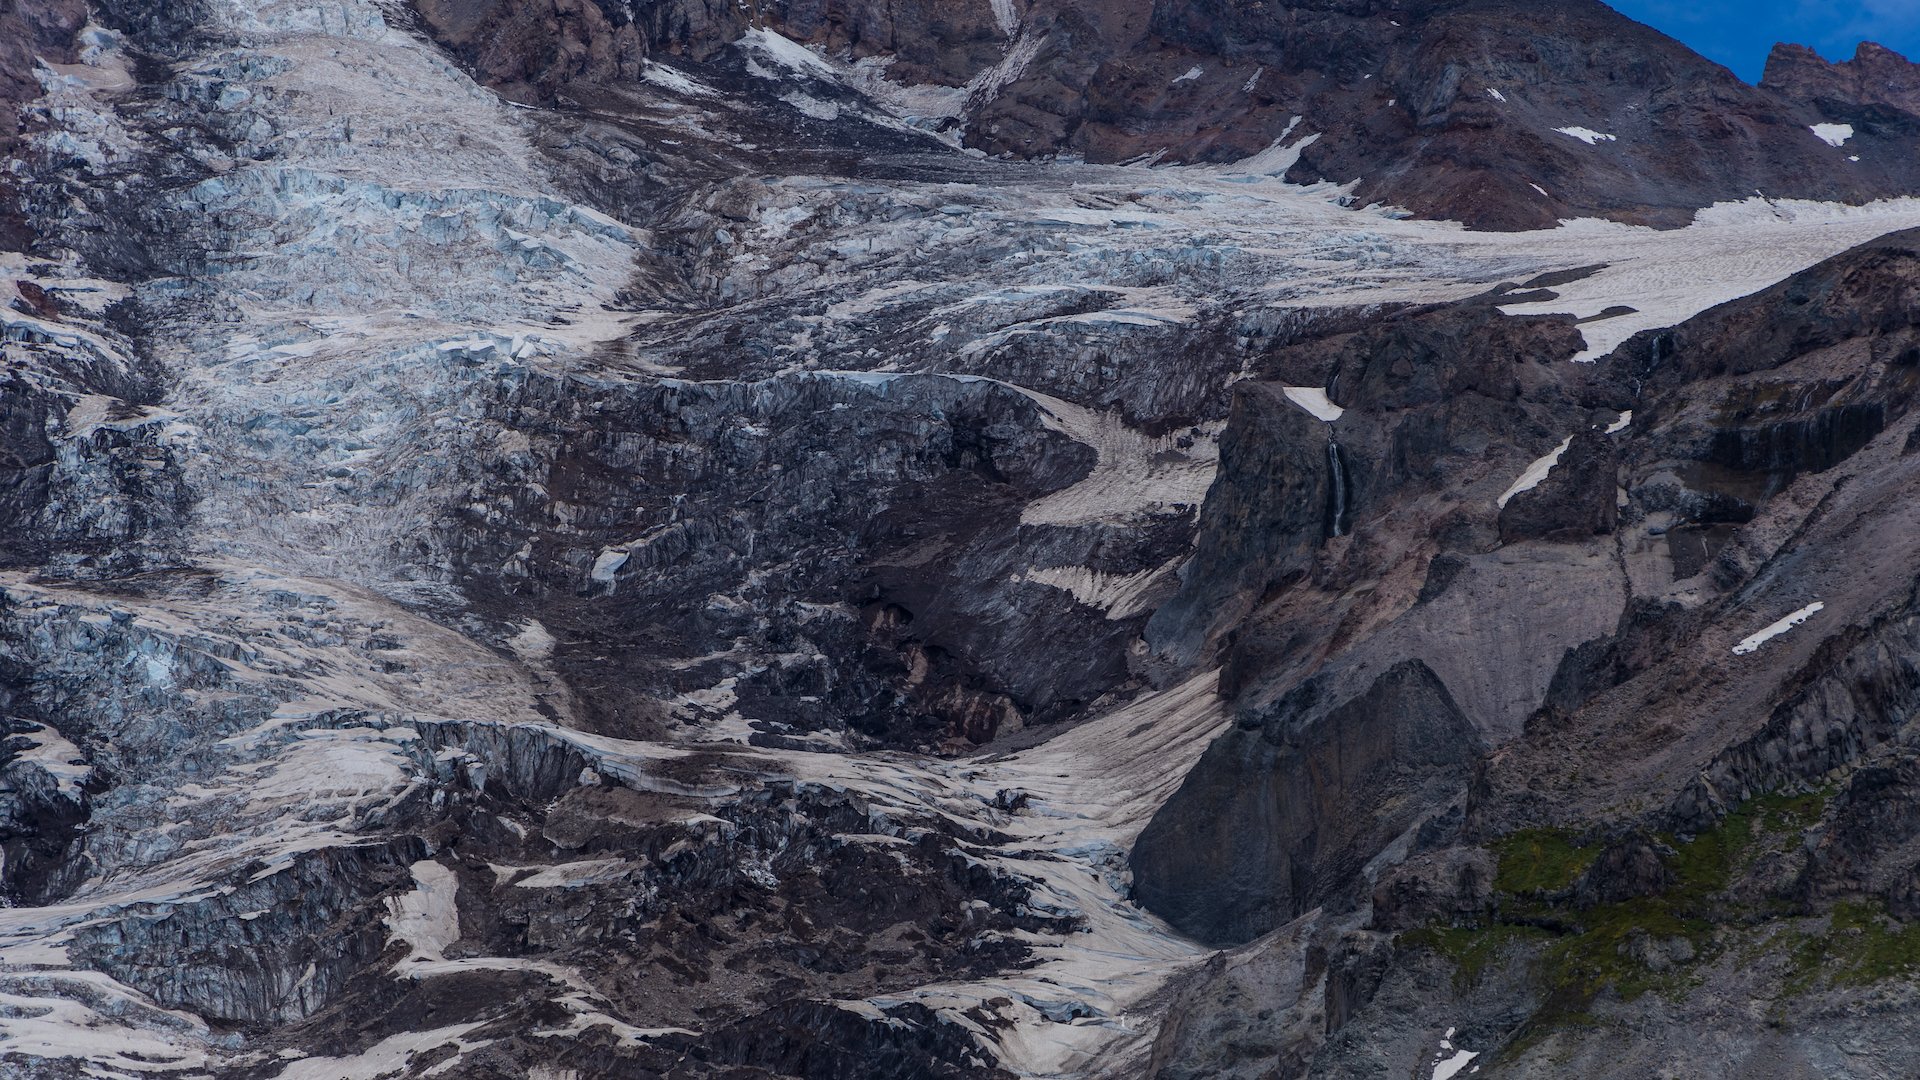  More glacier close ups.  